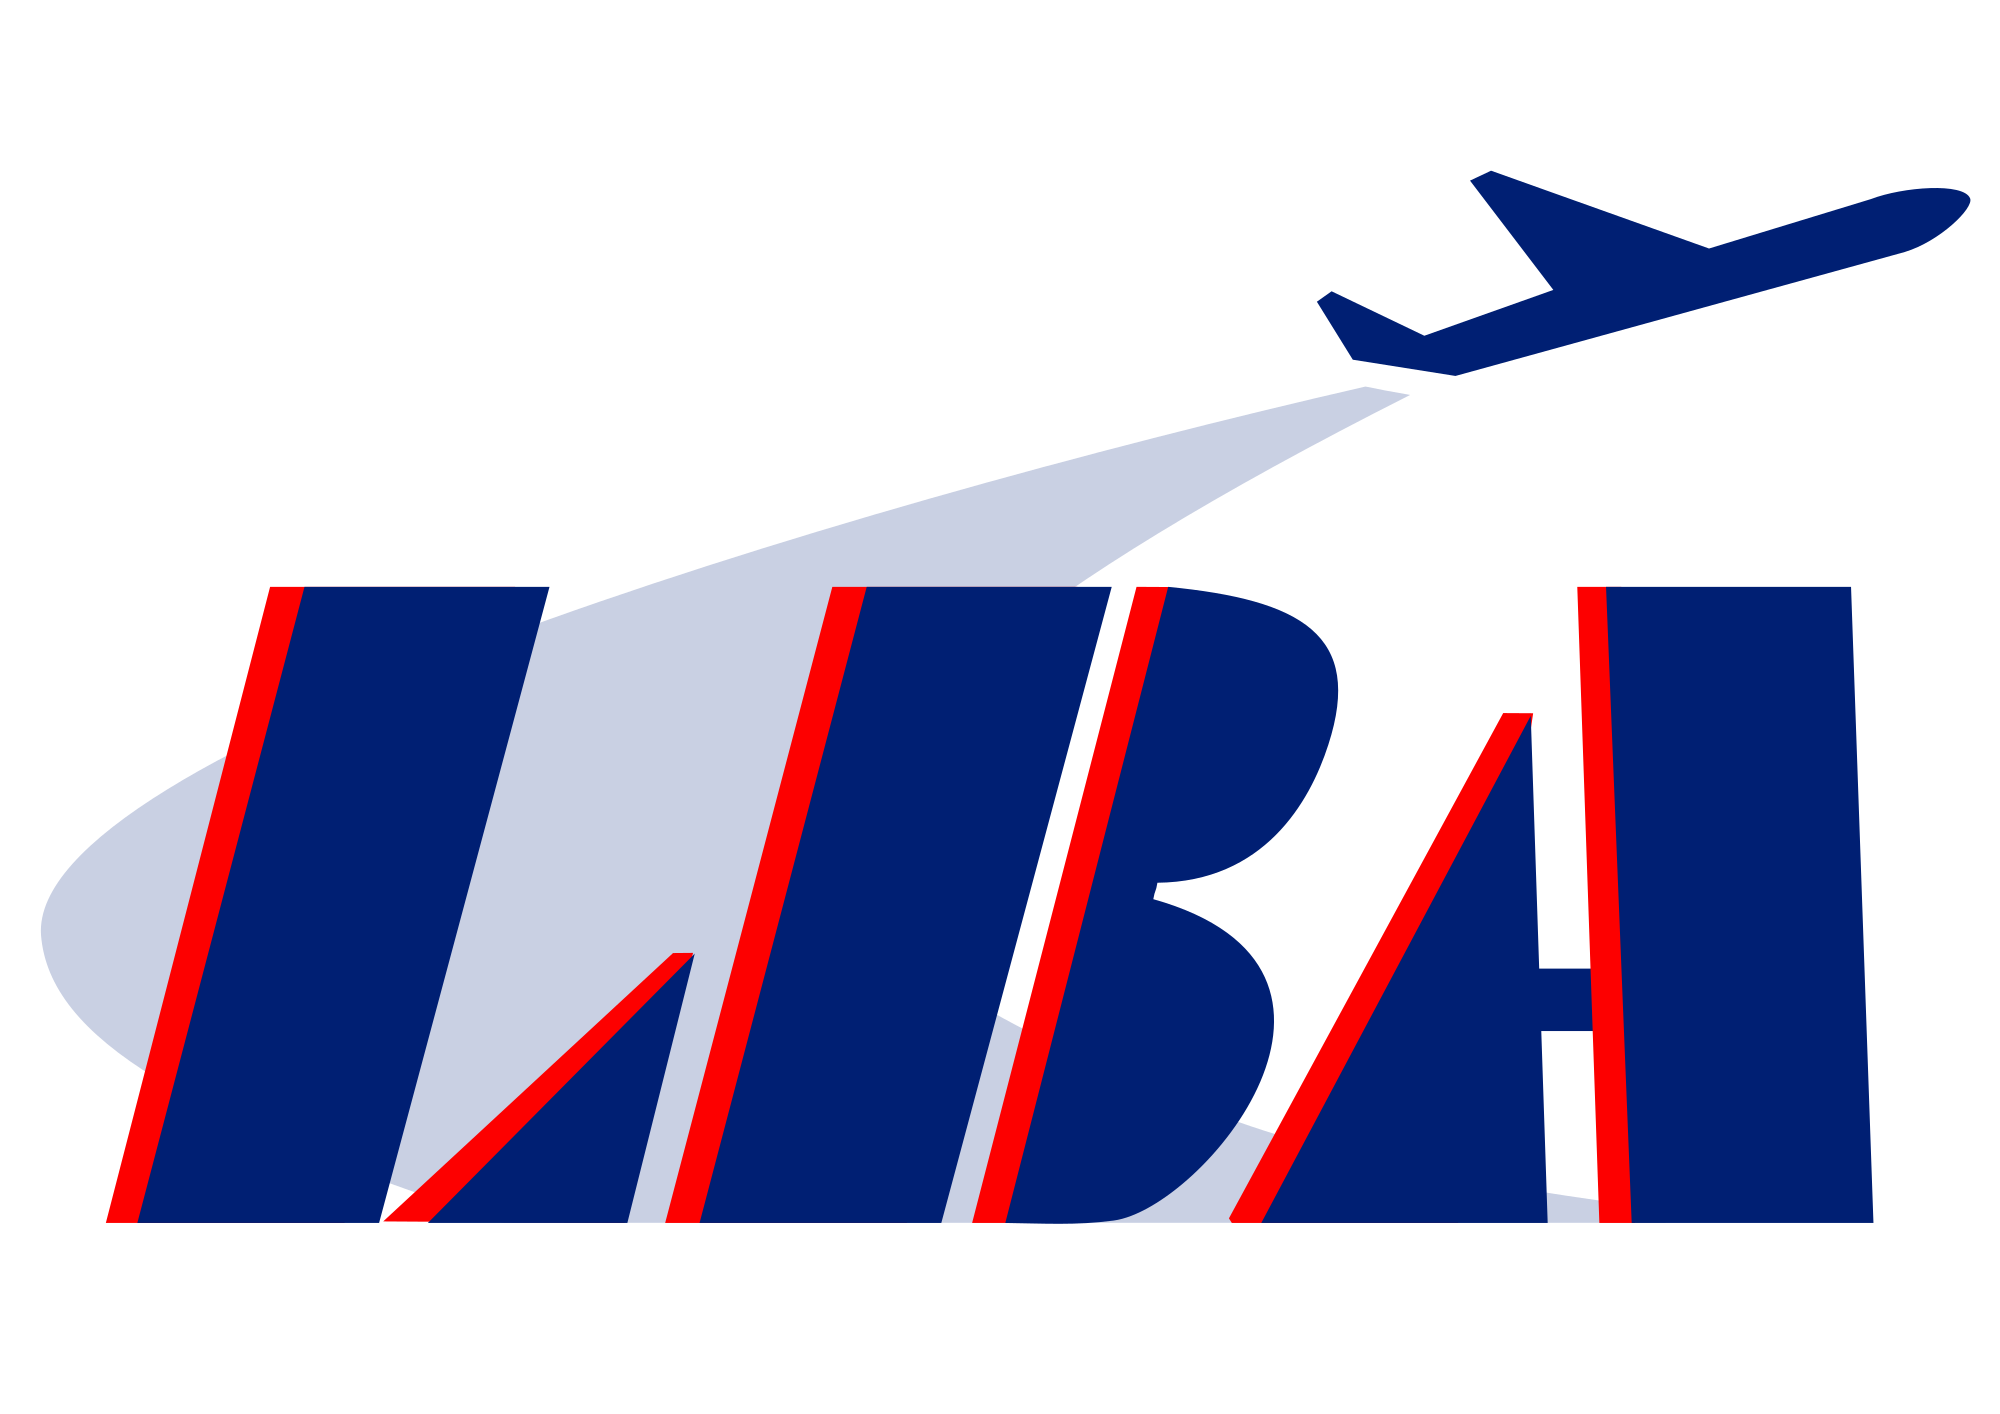 LBA Logo